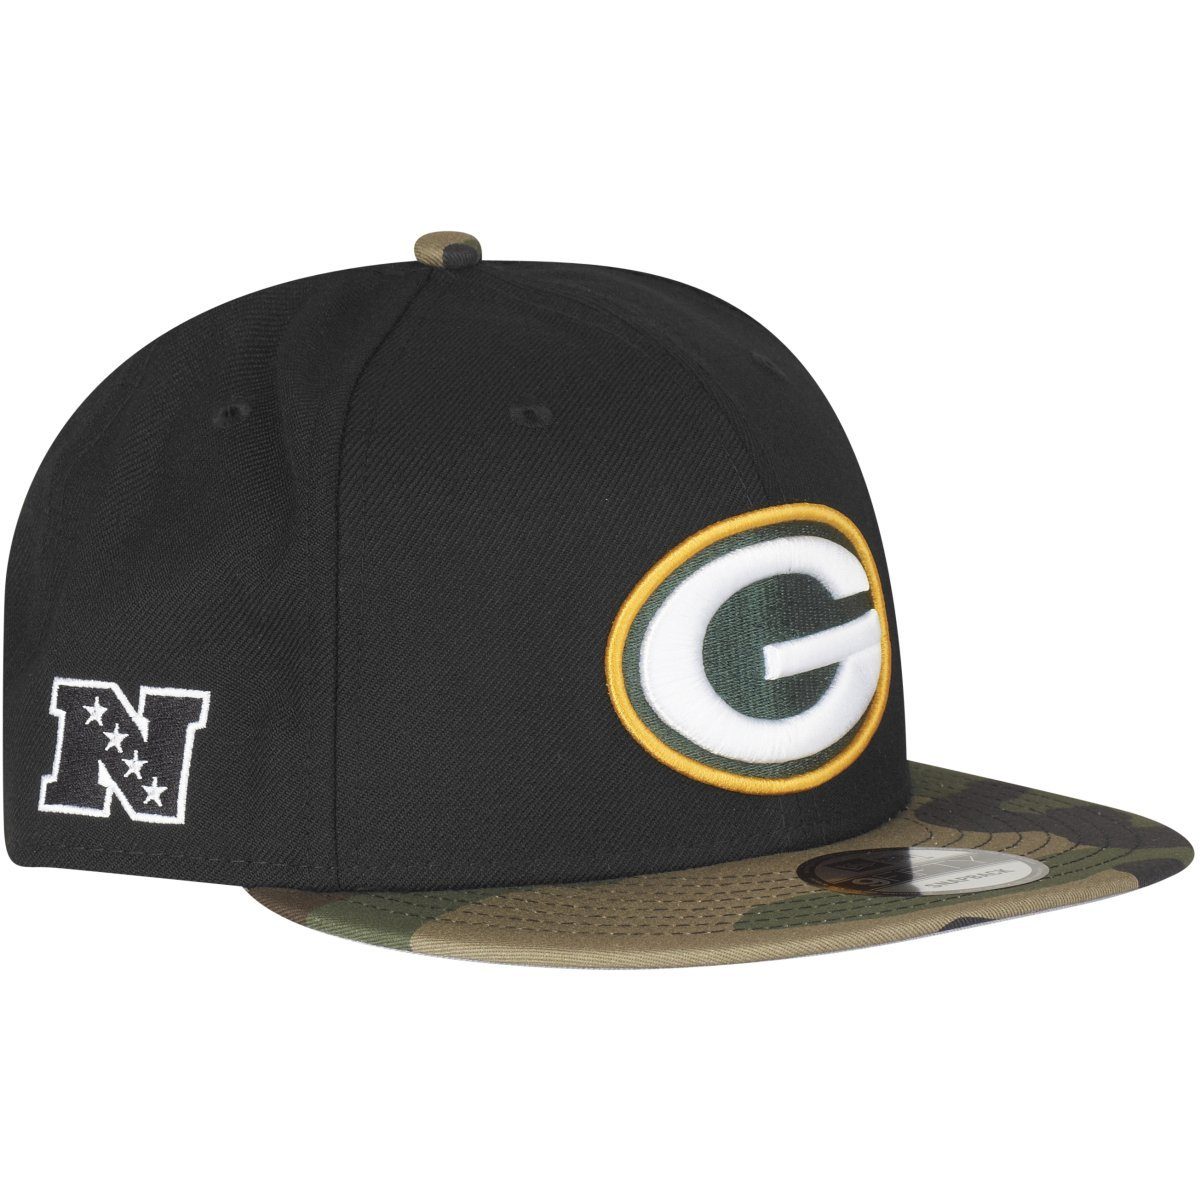 Bay Packers 9Fifty Cap Green Snapback Era New